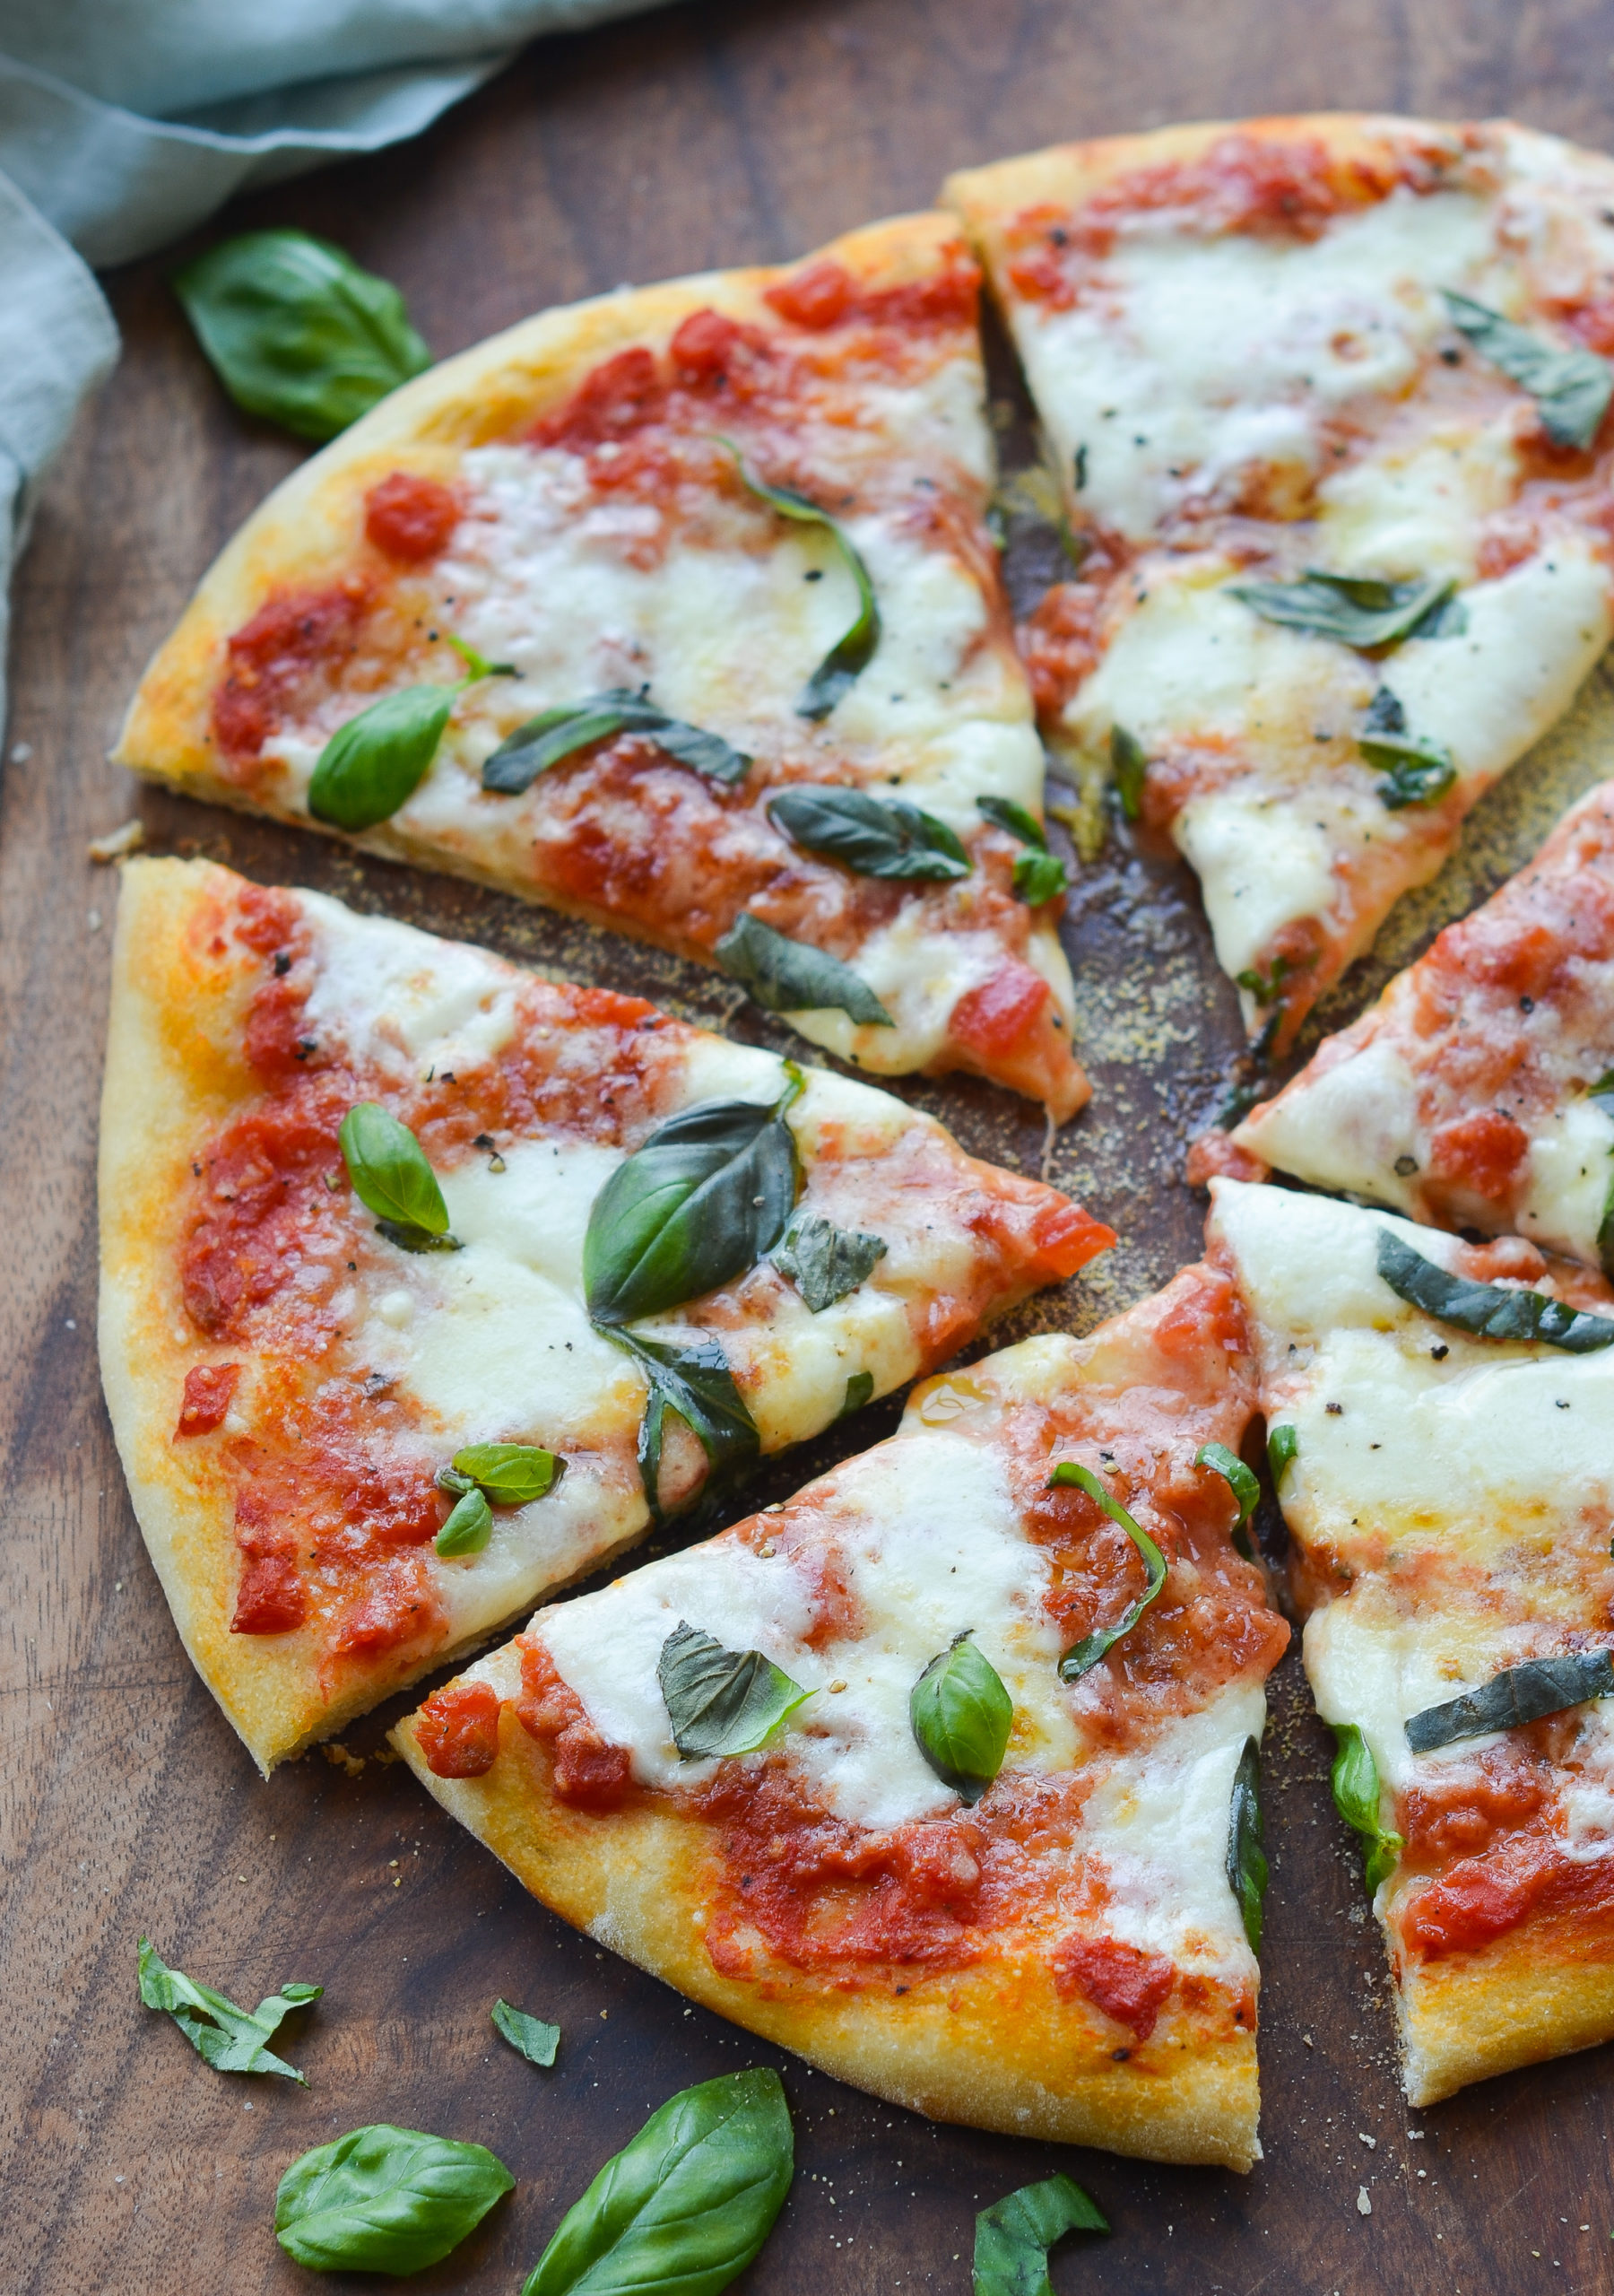 30 Best Pizza Recipes - Easy Homemade Pizza Ideas